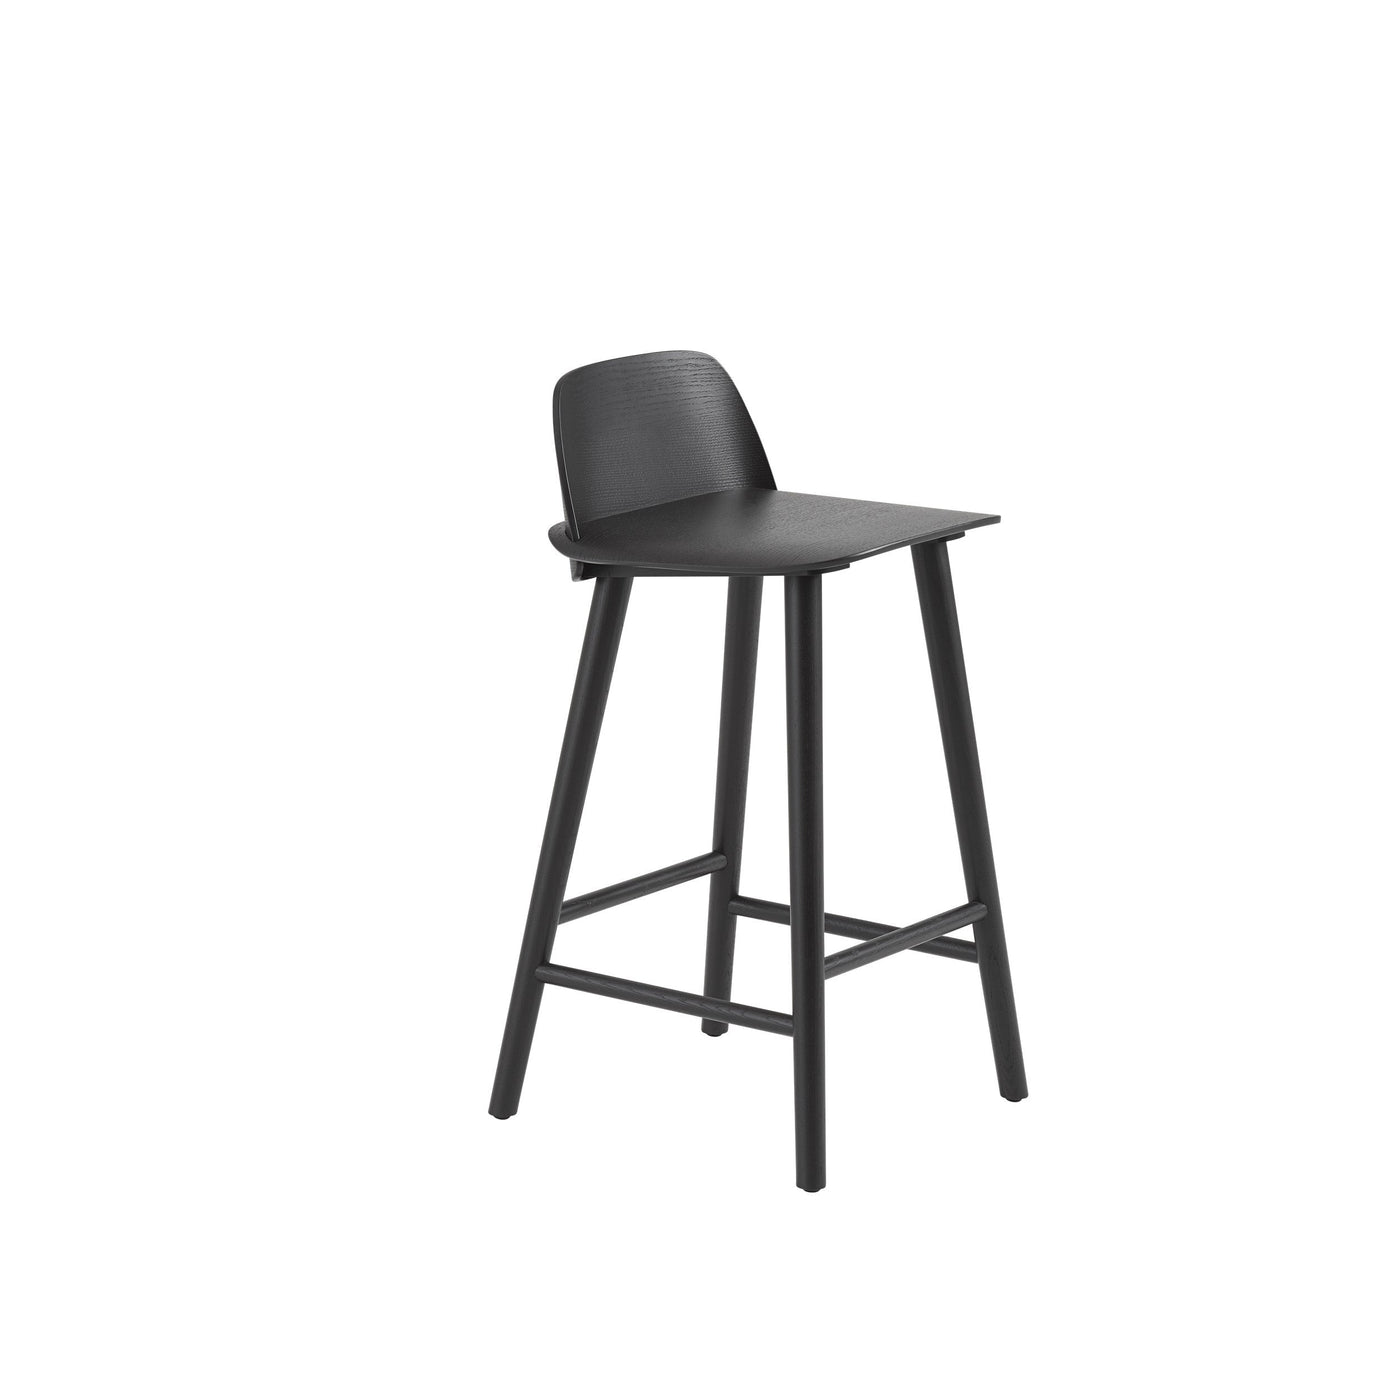 Muuto Nerd bar stool. Shop online at someday designs. #colour_black